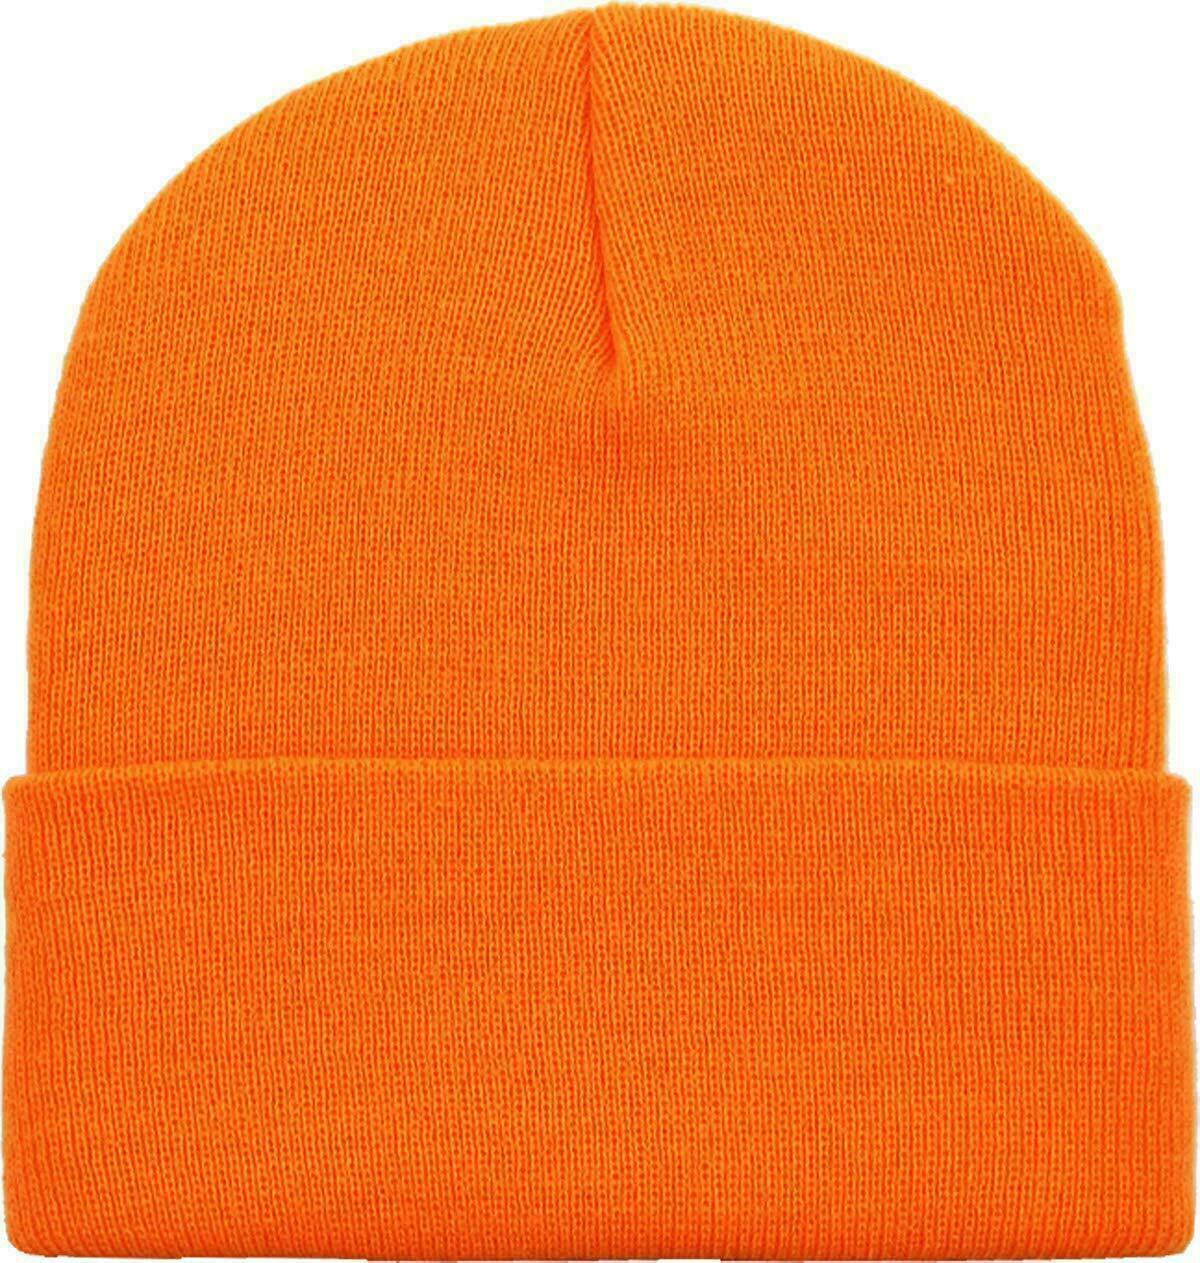 MEN MENS Womens Plain Winter Ski Thermal WARM Knit Knitted BEANIE HAT Cap Bulk Orange